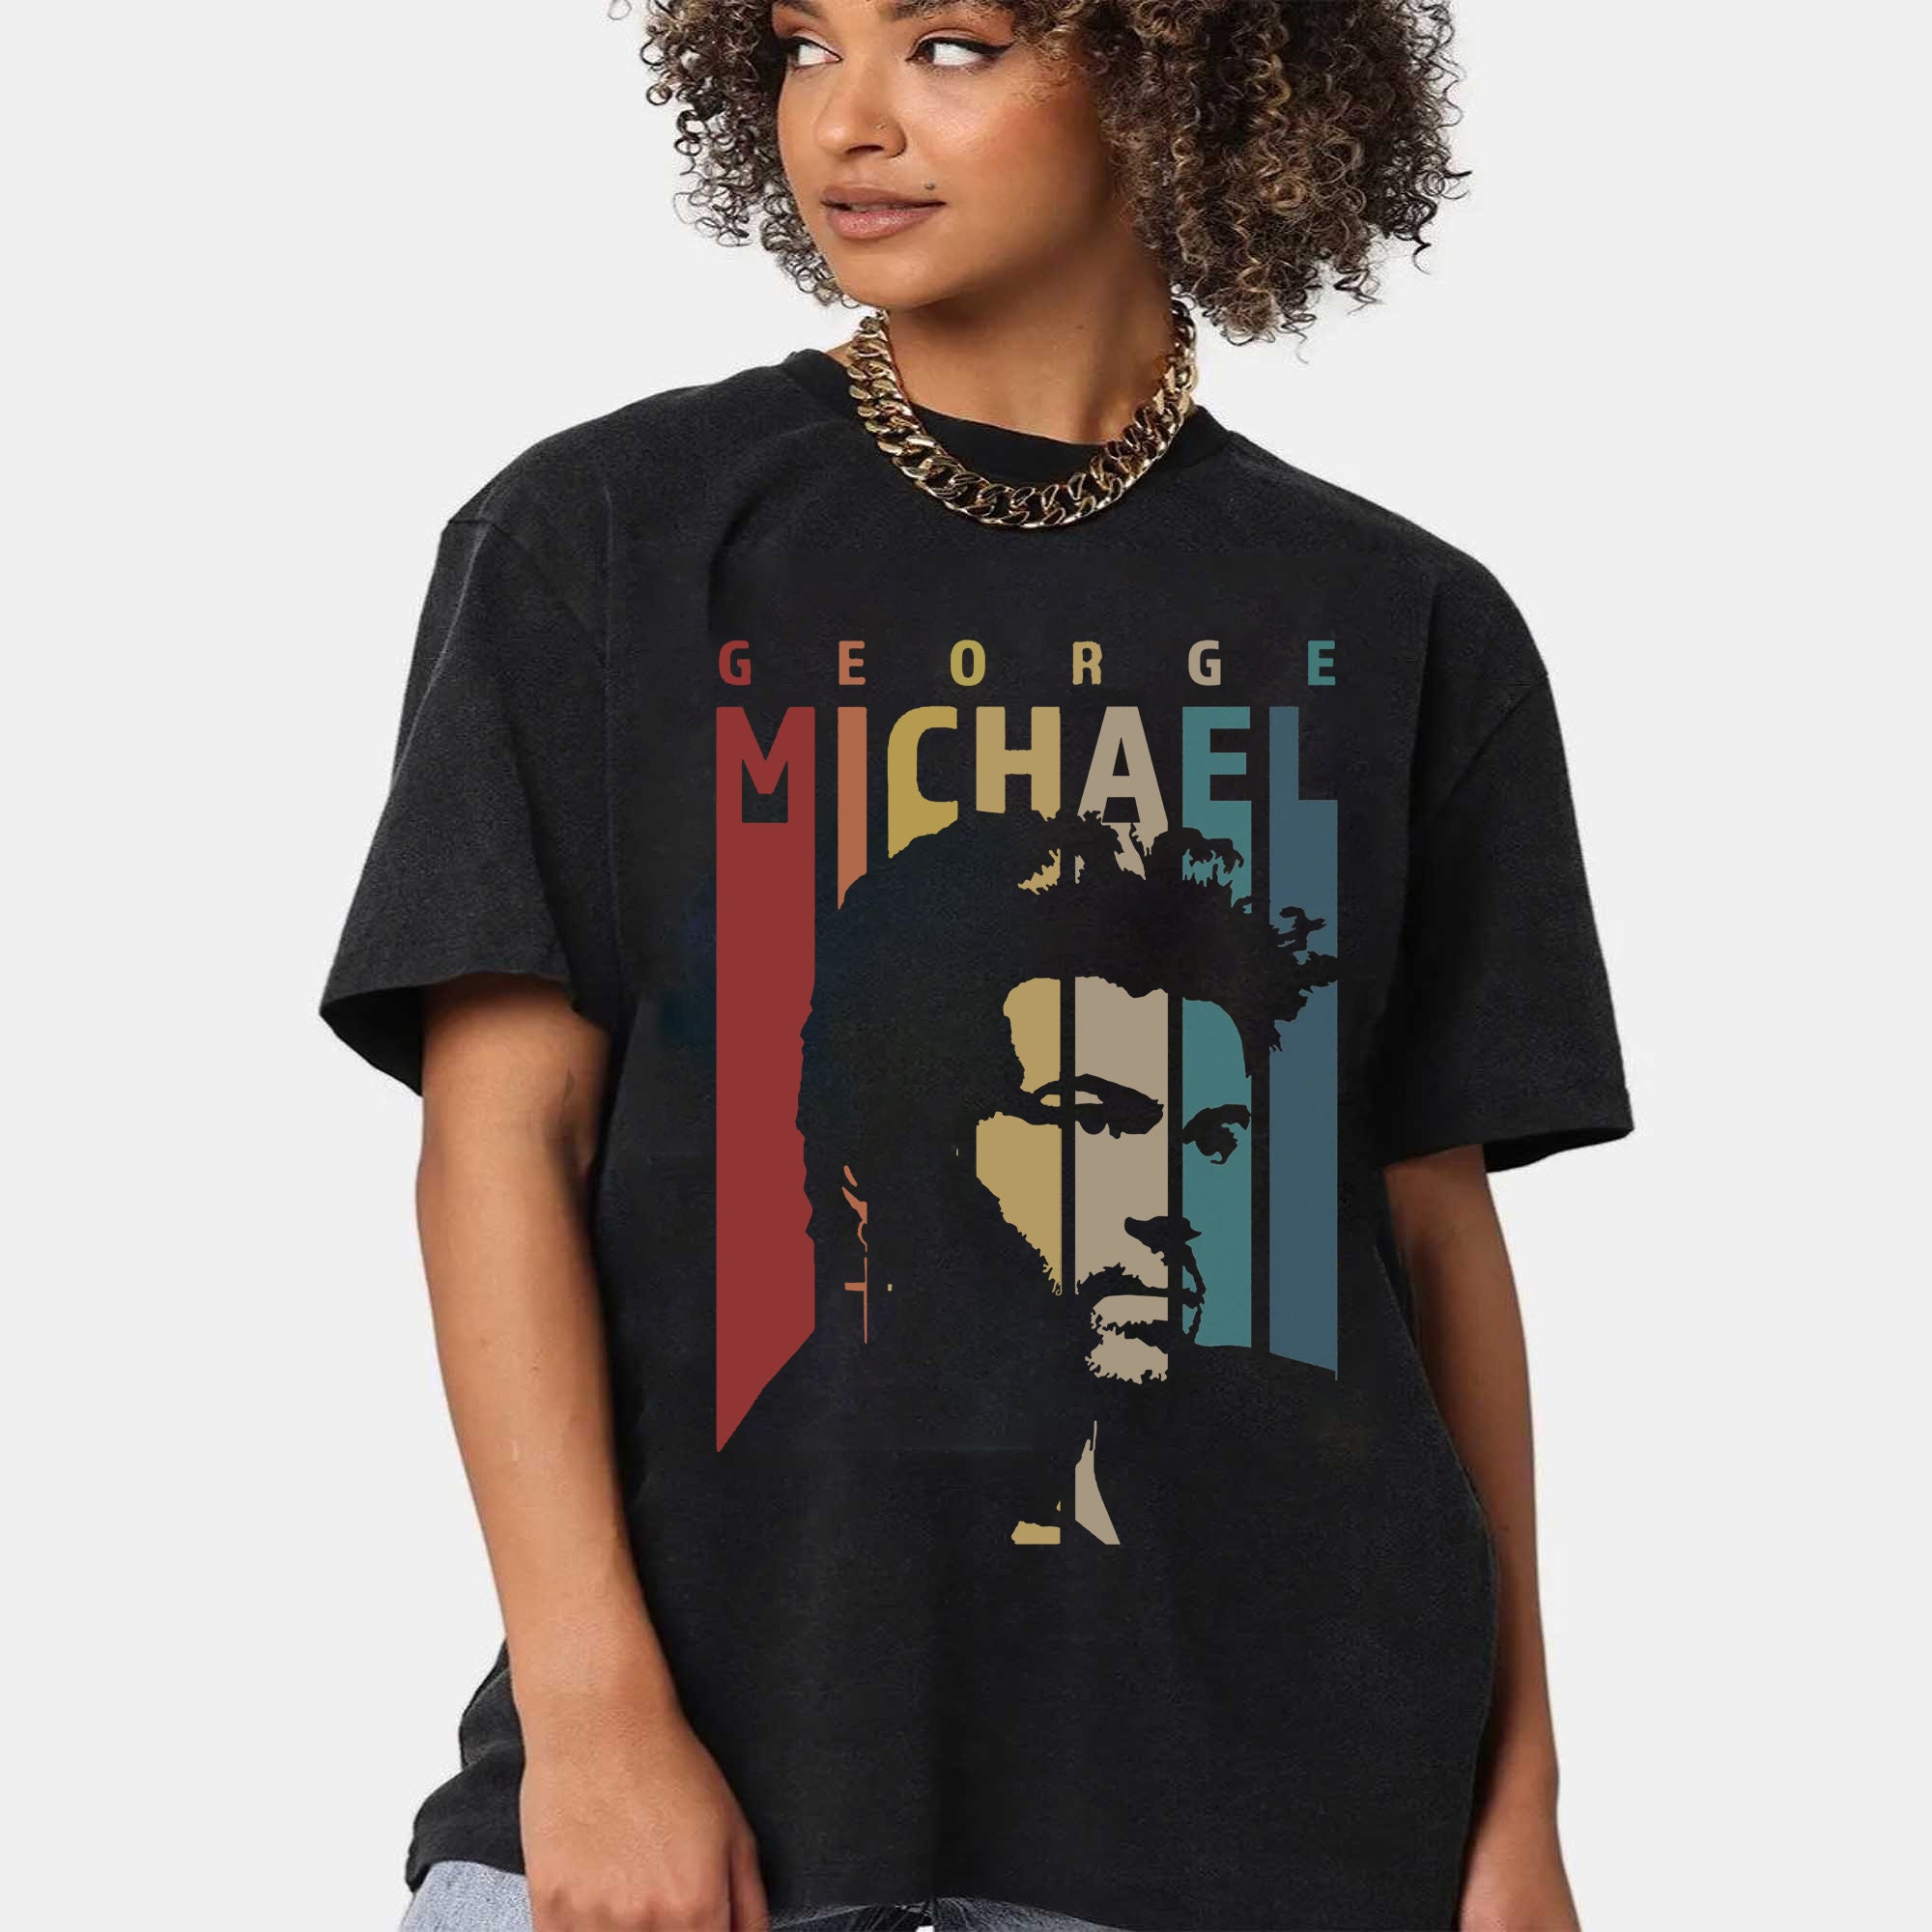 Discover Vintage Retro George Michael T-Shirt, George Michael Shirt Gift, Retro Gift Tee For You And Your Friends